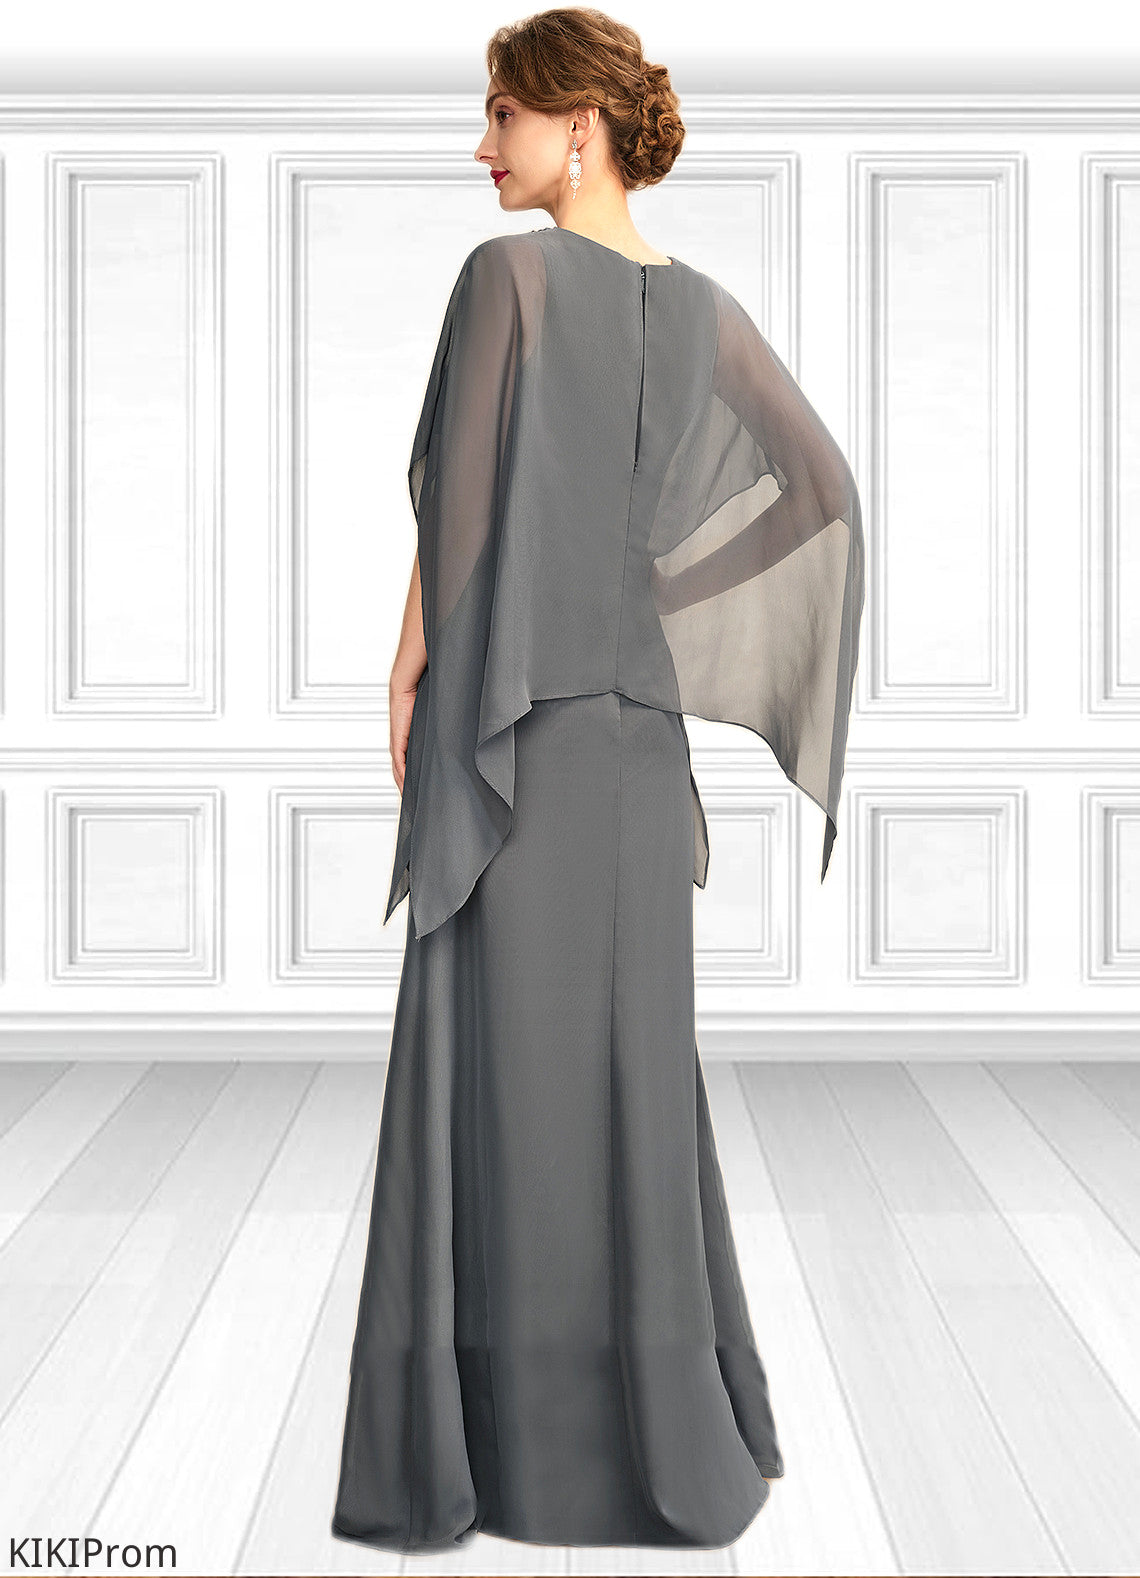 Monserrat A-line V-Neck Floor-Length Chiffon Mother of the Bride Dress With Beading Sequins DZ126P0015031